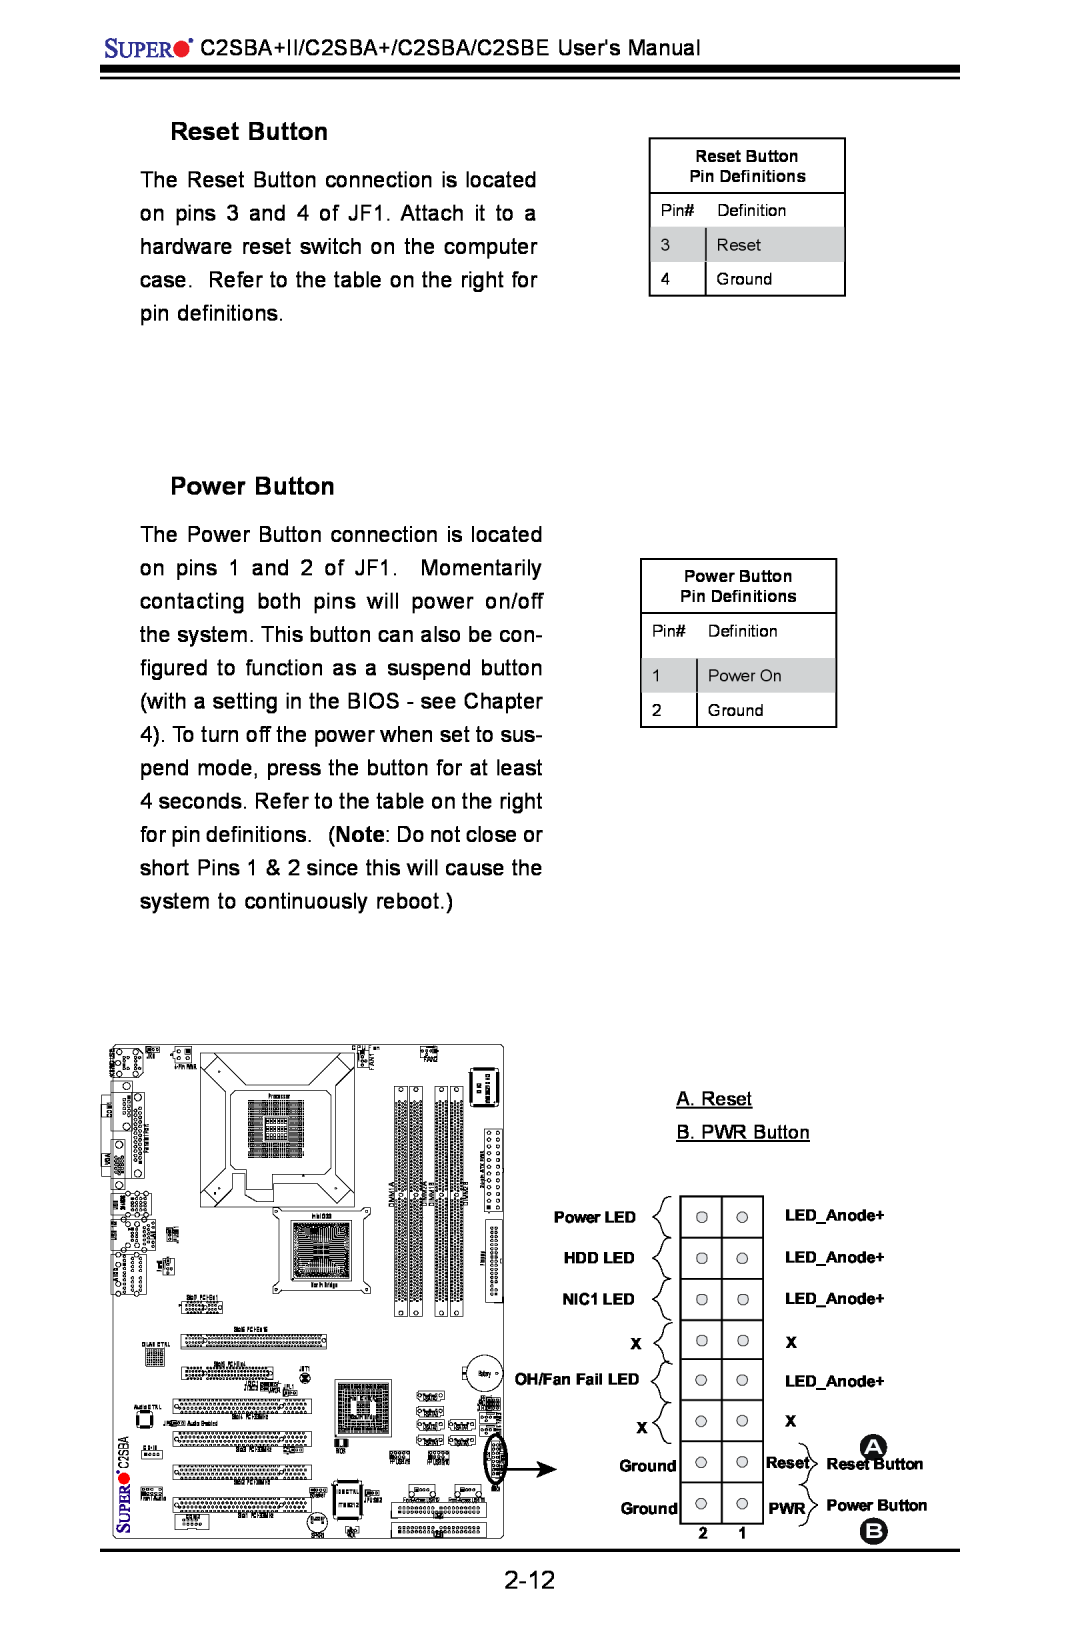 SUPER MICRO Computer C2SBE, C2SBA+II user manual Reset Button, Power Button, A. Reset, B. PWR Button 